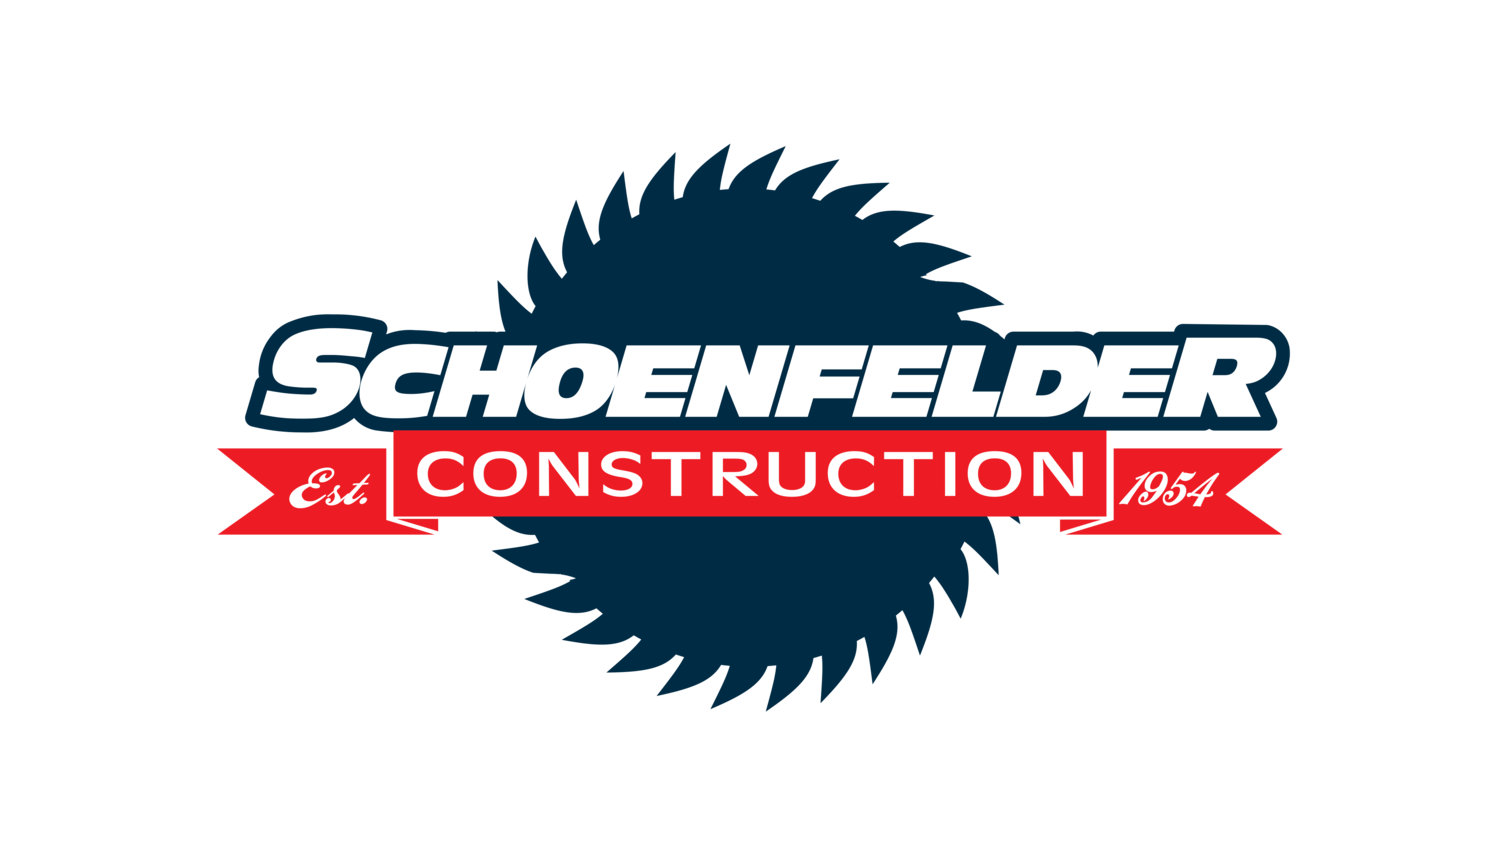 Schoenfelder Construction